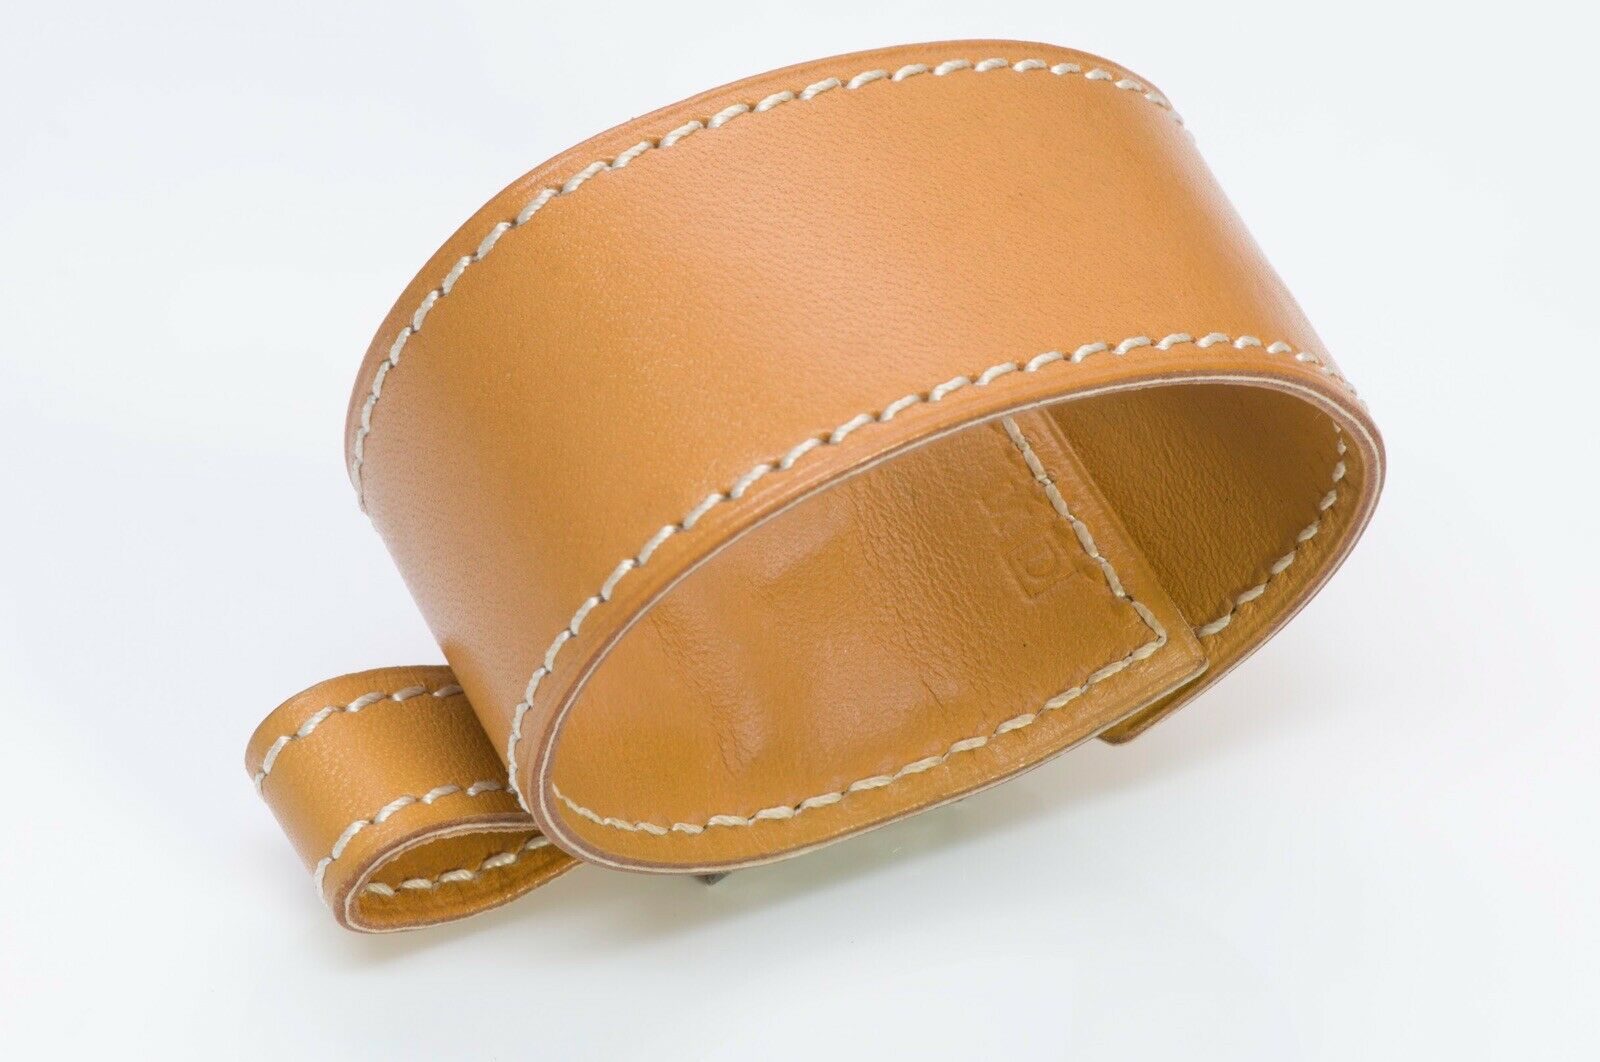 HERMES Paris TOUAREG Brown Leather Sterling Silver Bracelet